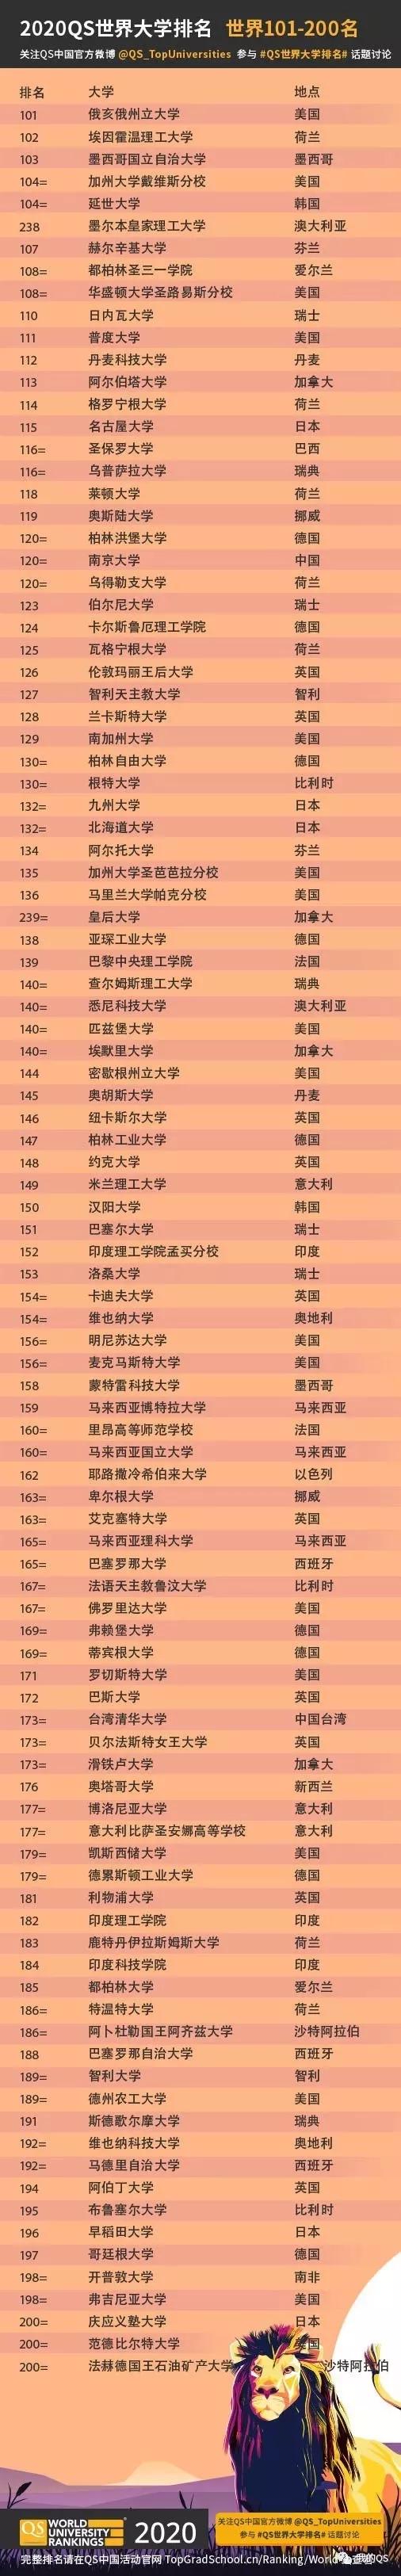 bgg桌游排名中文2020_出海新创意:2020年Top10桌游BGG排行榜(2)